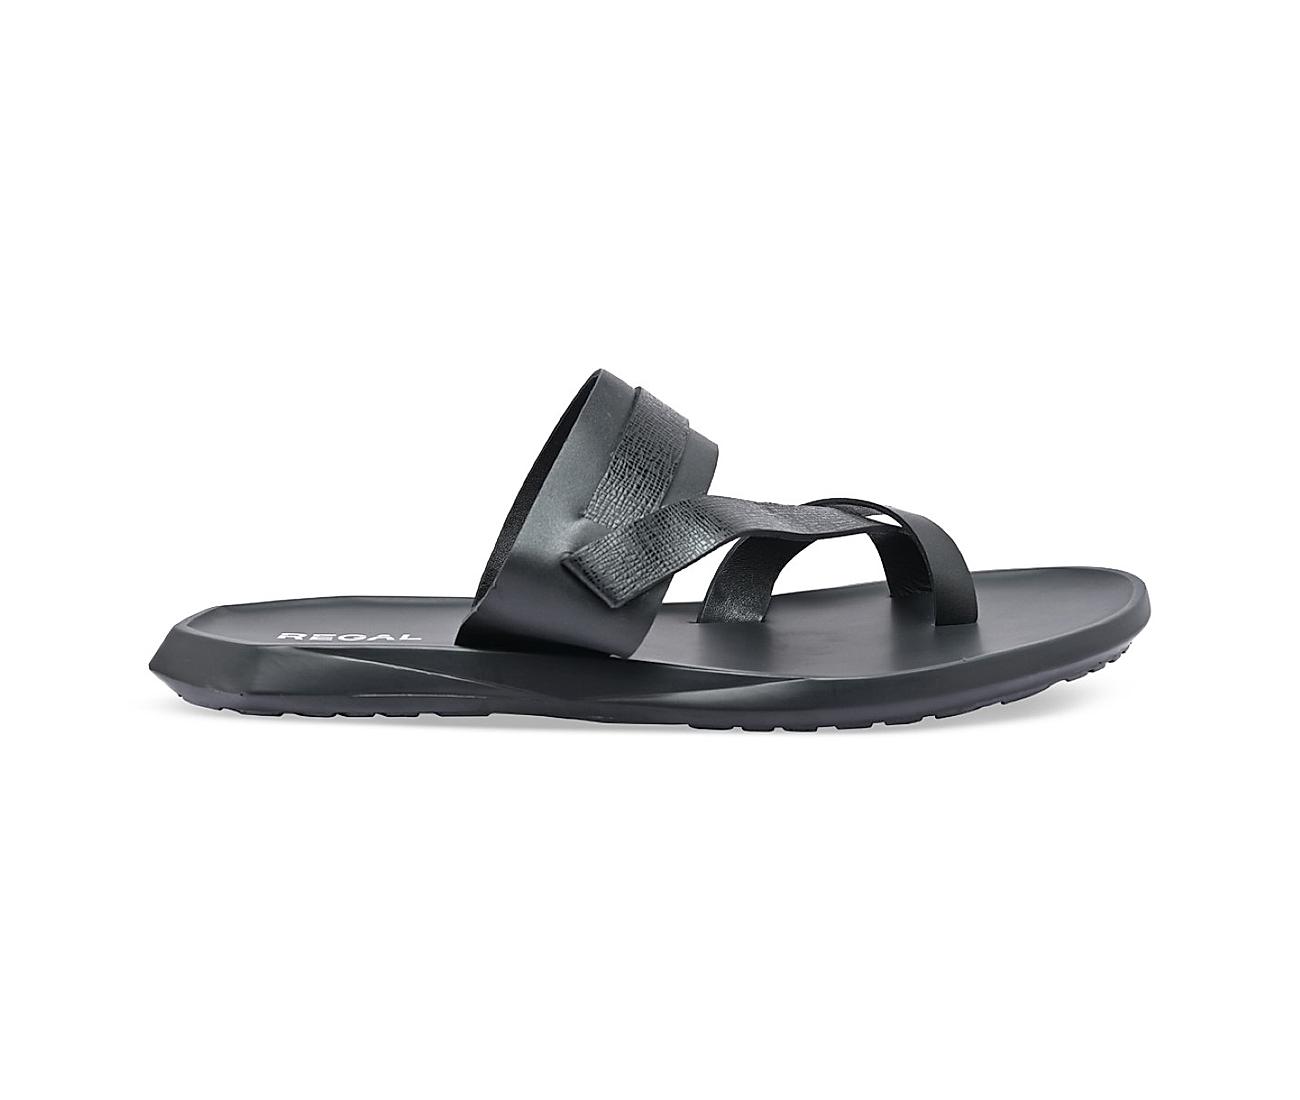 Men's Shoes: Sandals, lightweight Summer Shoes | Diesel ®